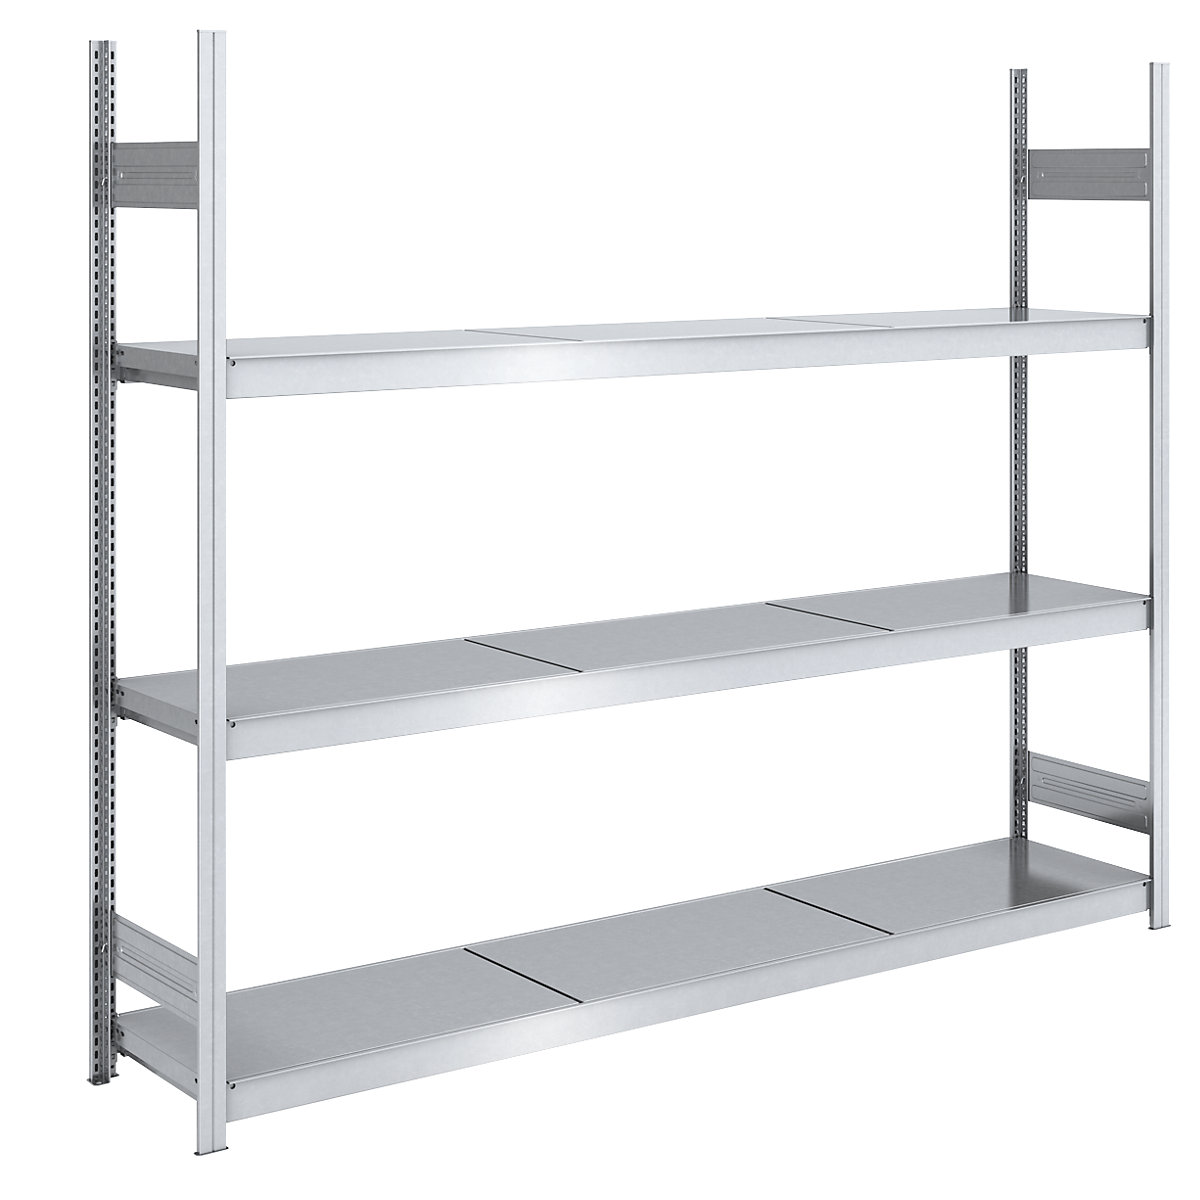 Wide span boltless shelving unit, zinc plated – hofe, shelf WxD 2250 x 500 mm, standard shelf unit, 3 steel shelves, height 2000 mm